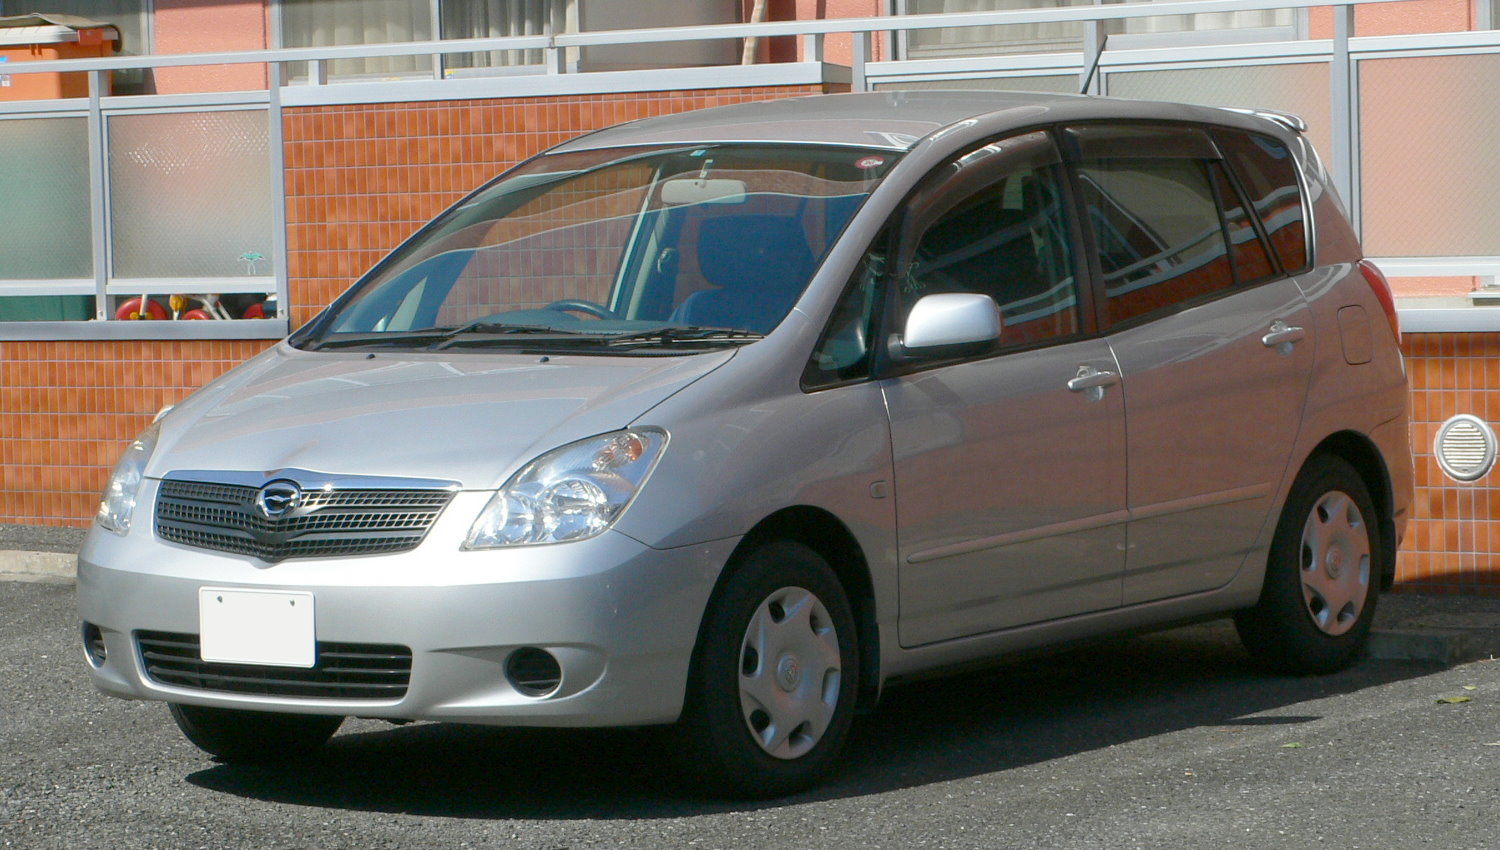 Toyota spacio 2003 wiki